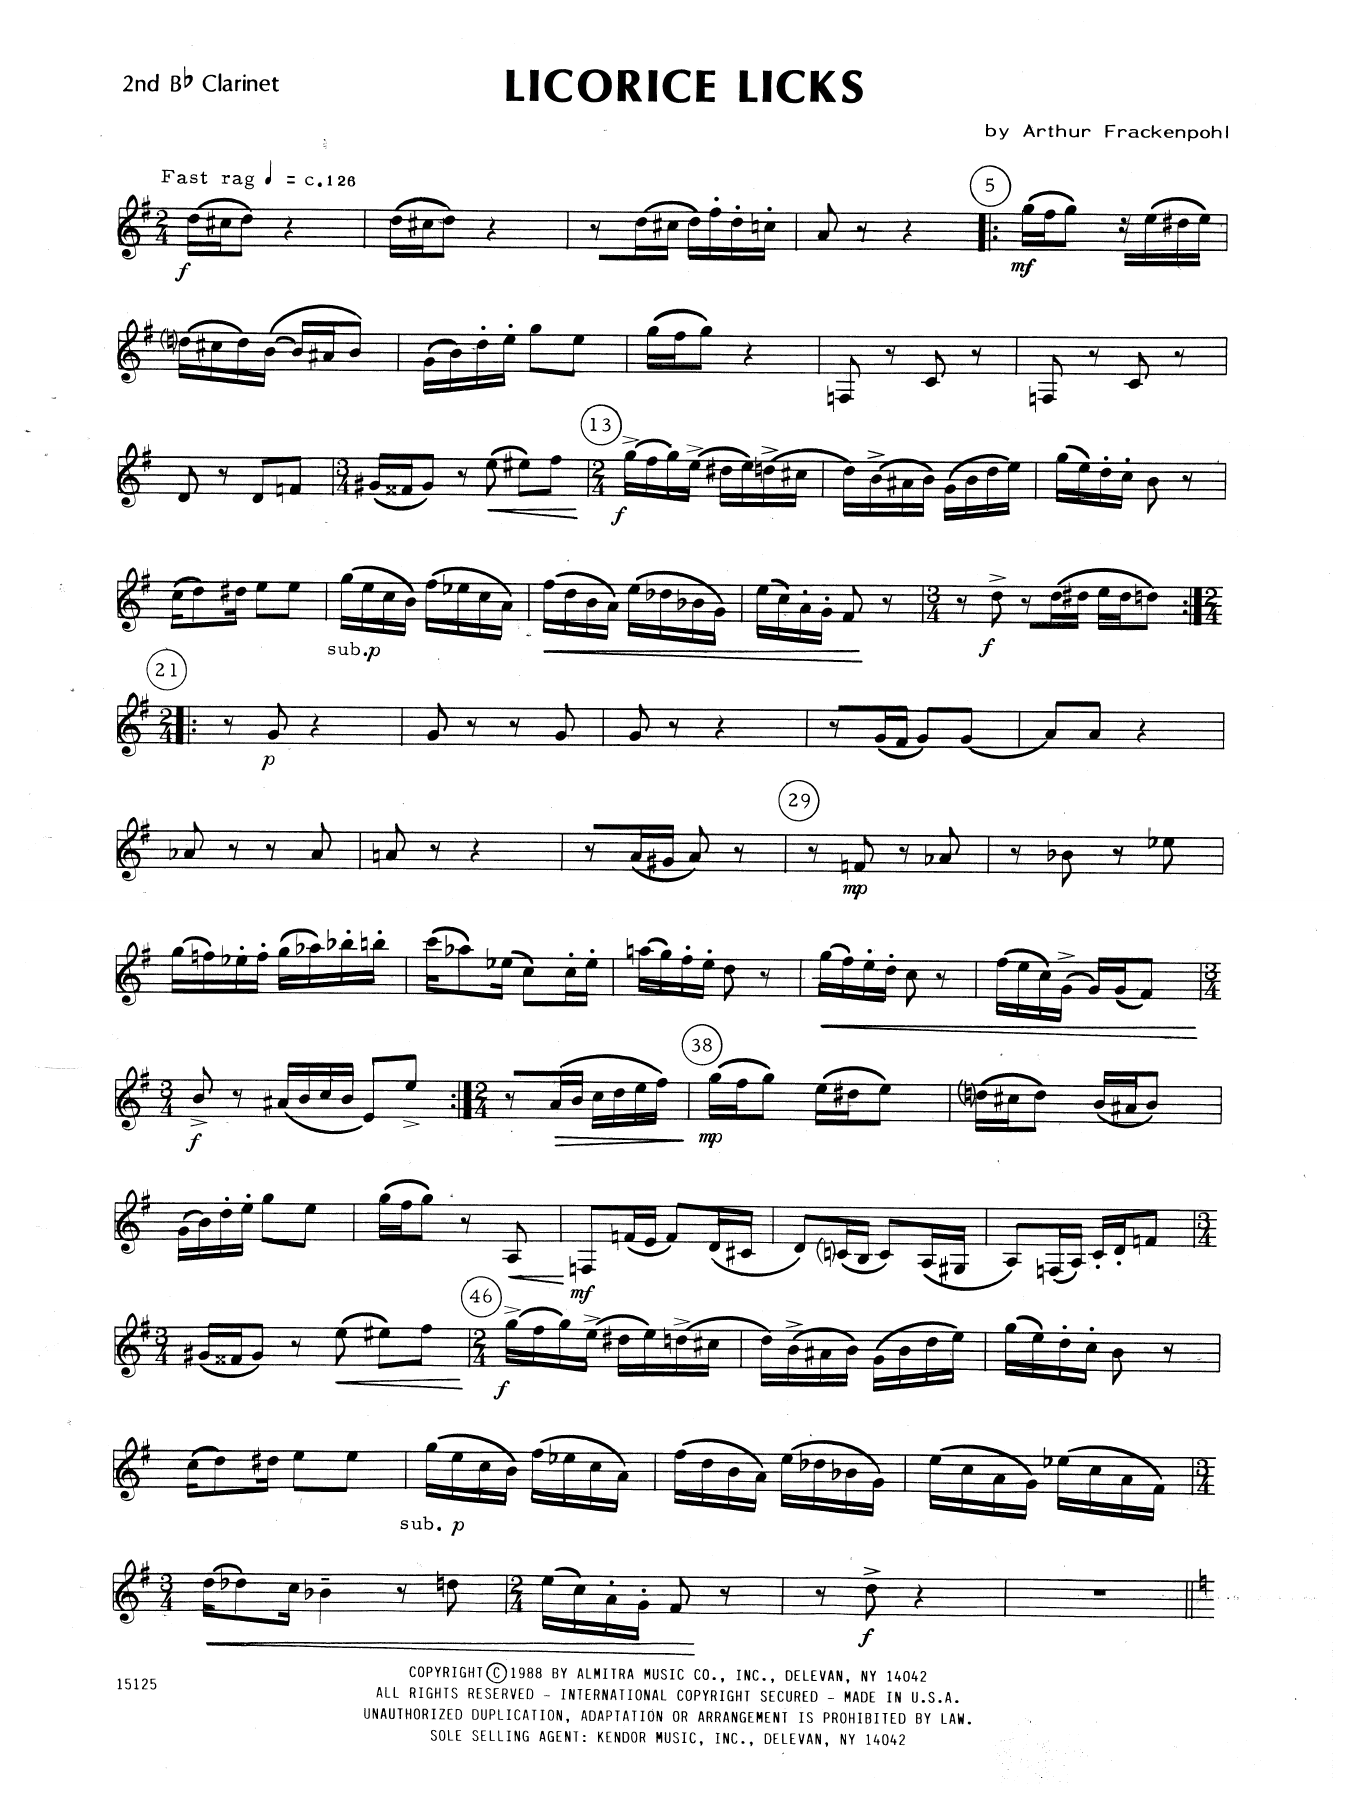 Download Arthur Frackenpohl Licorice Licks - 2nd Bb Clarinet Sheet Music